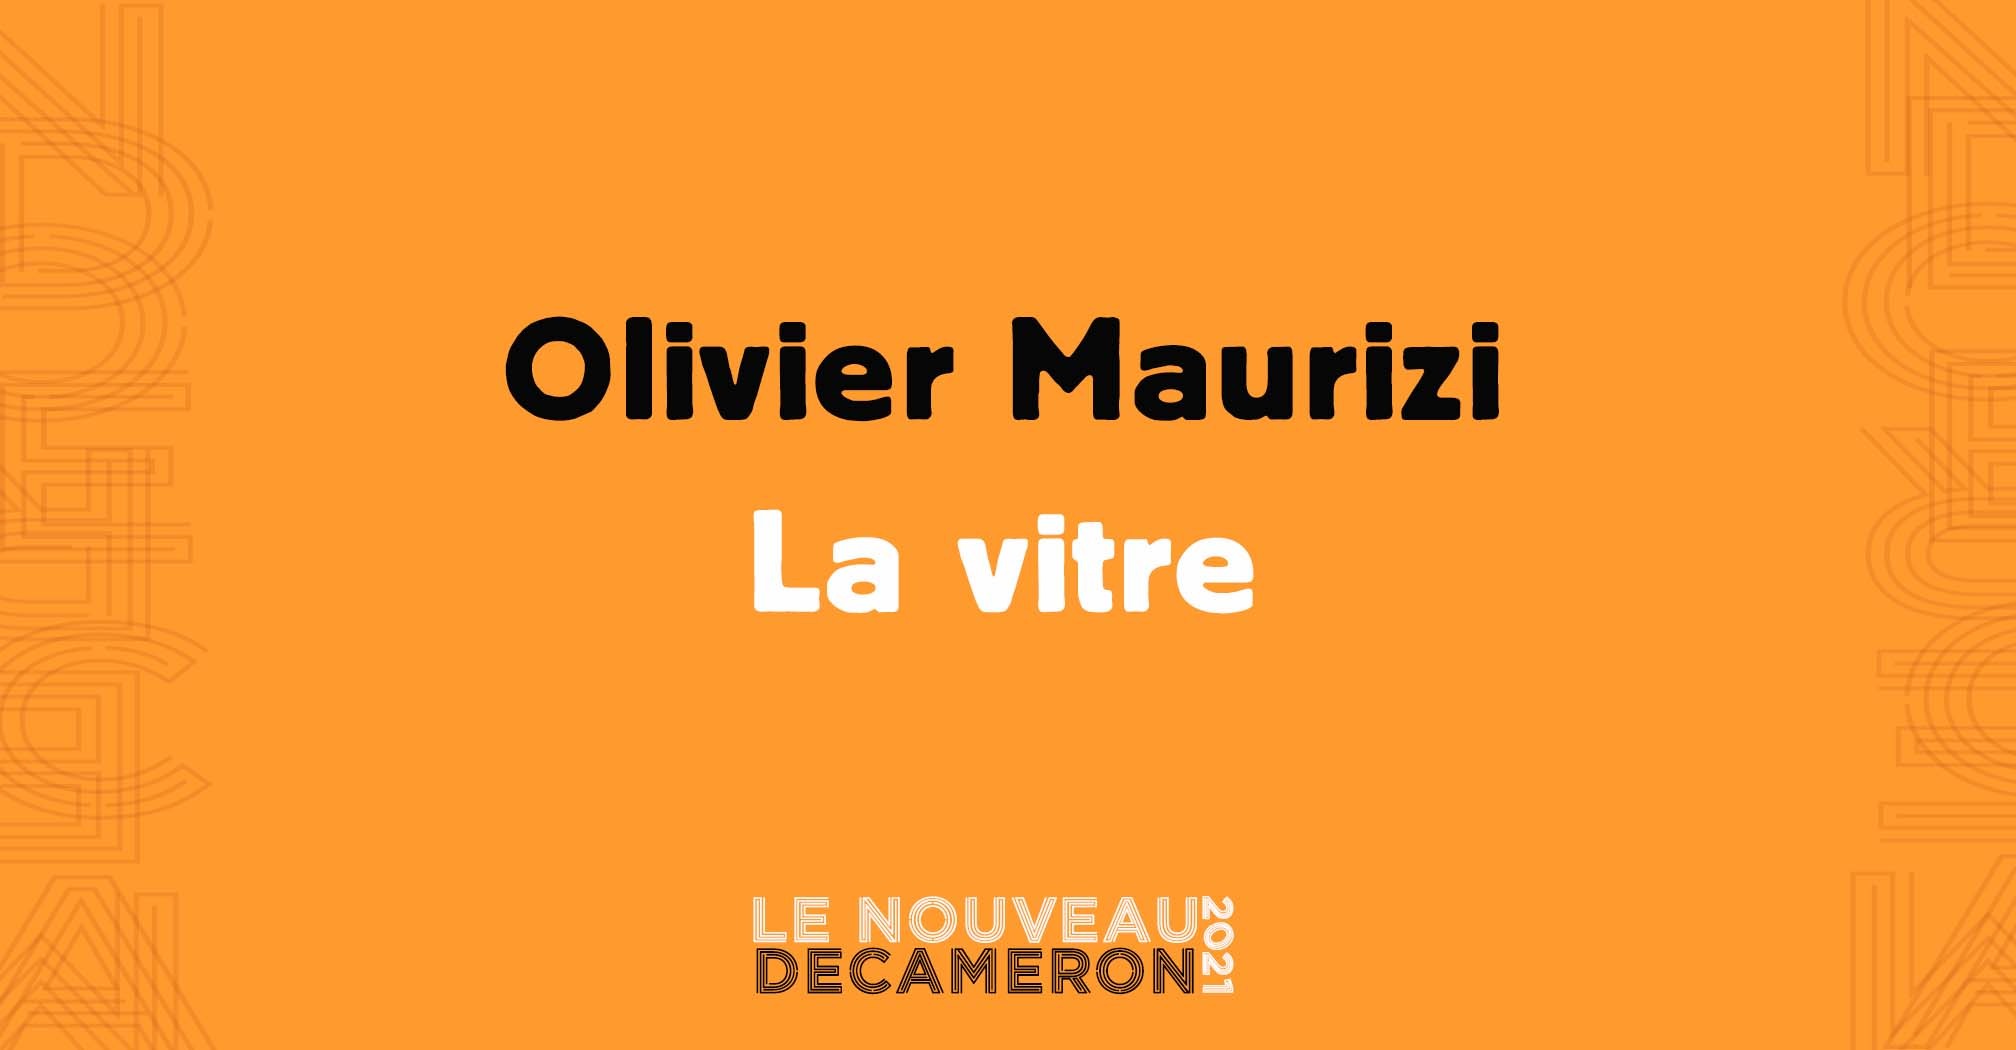 Olivier Maurizi - La vitre